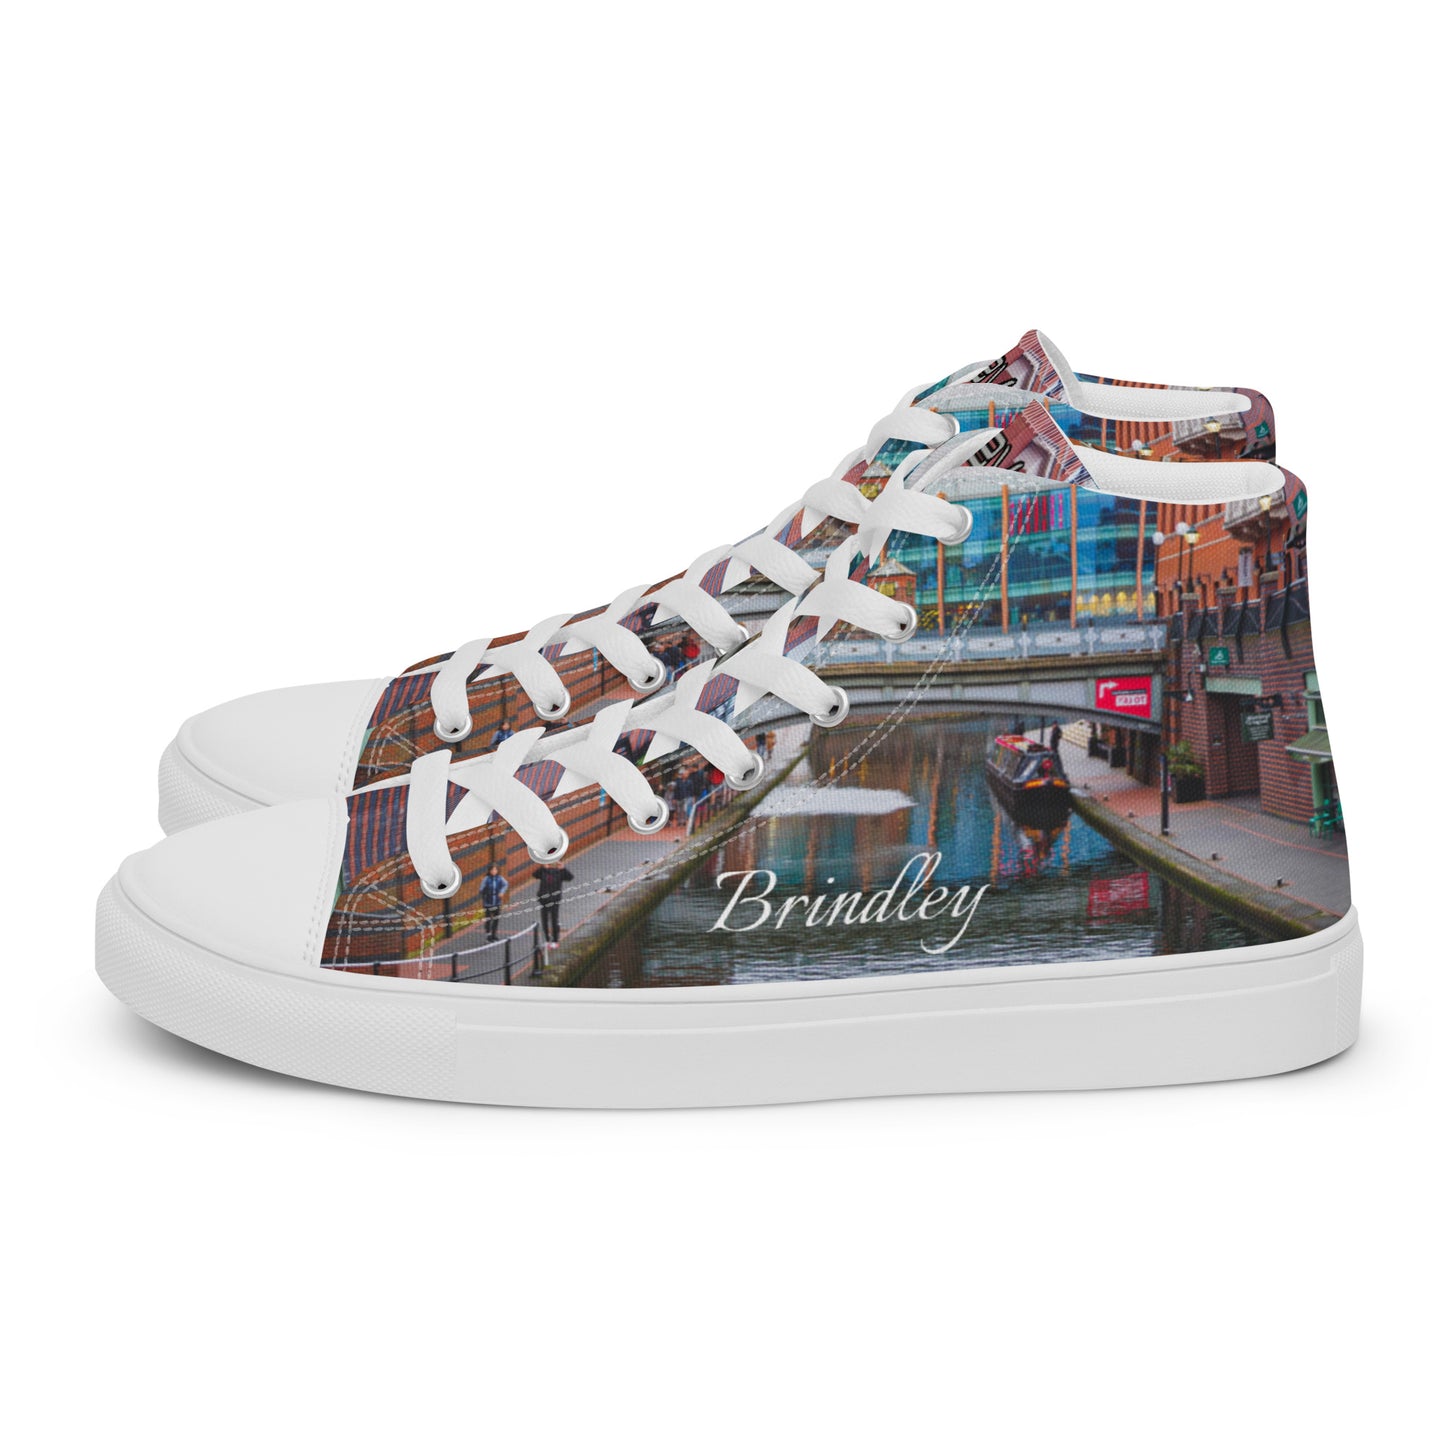 Brindley High Top Canvas Sneakers - Men